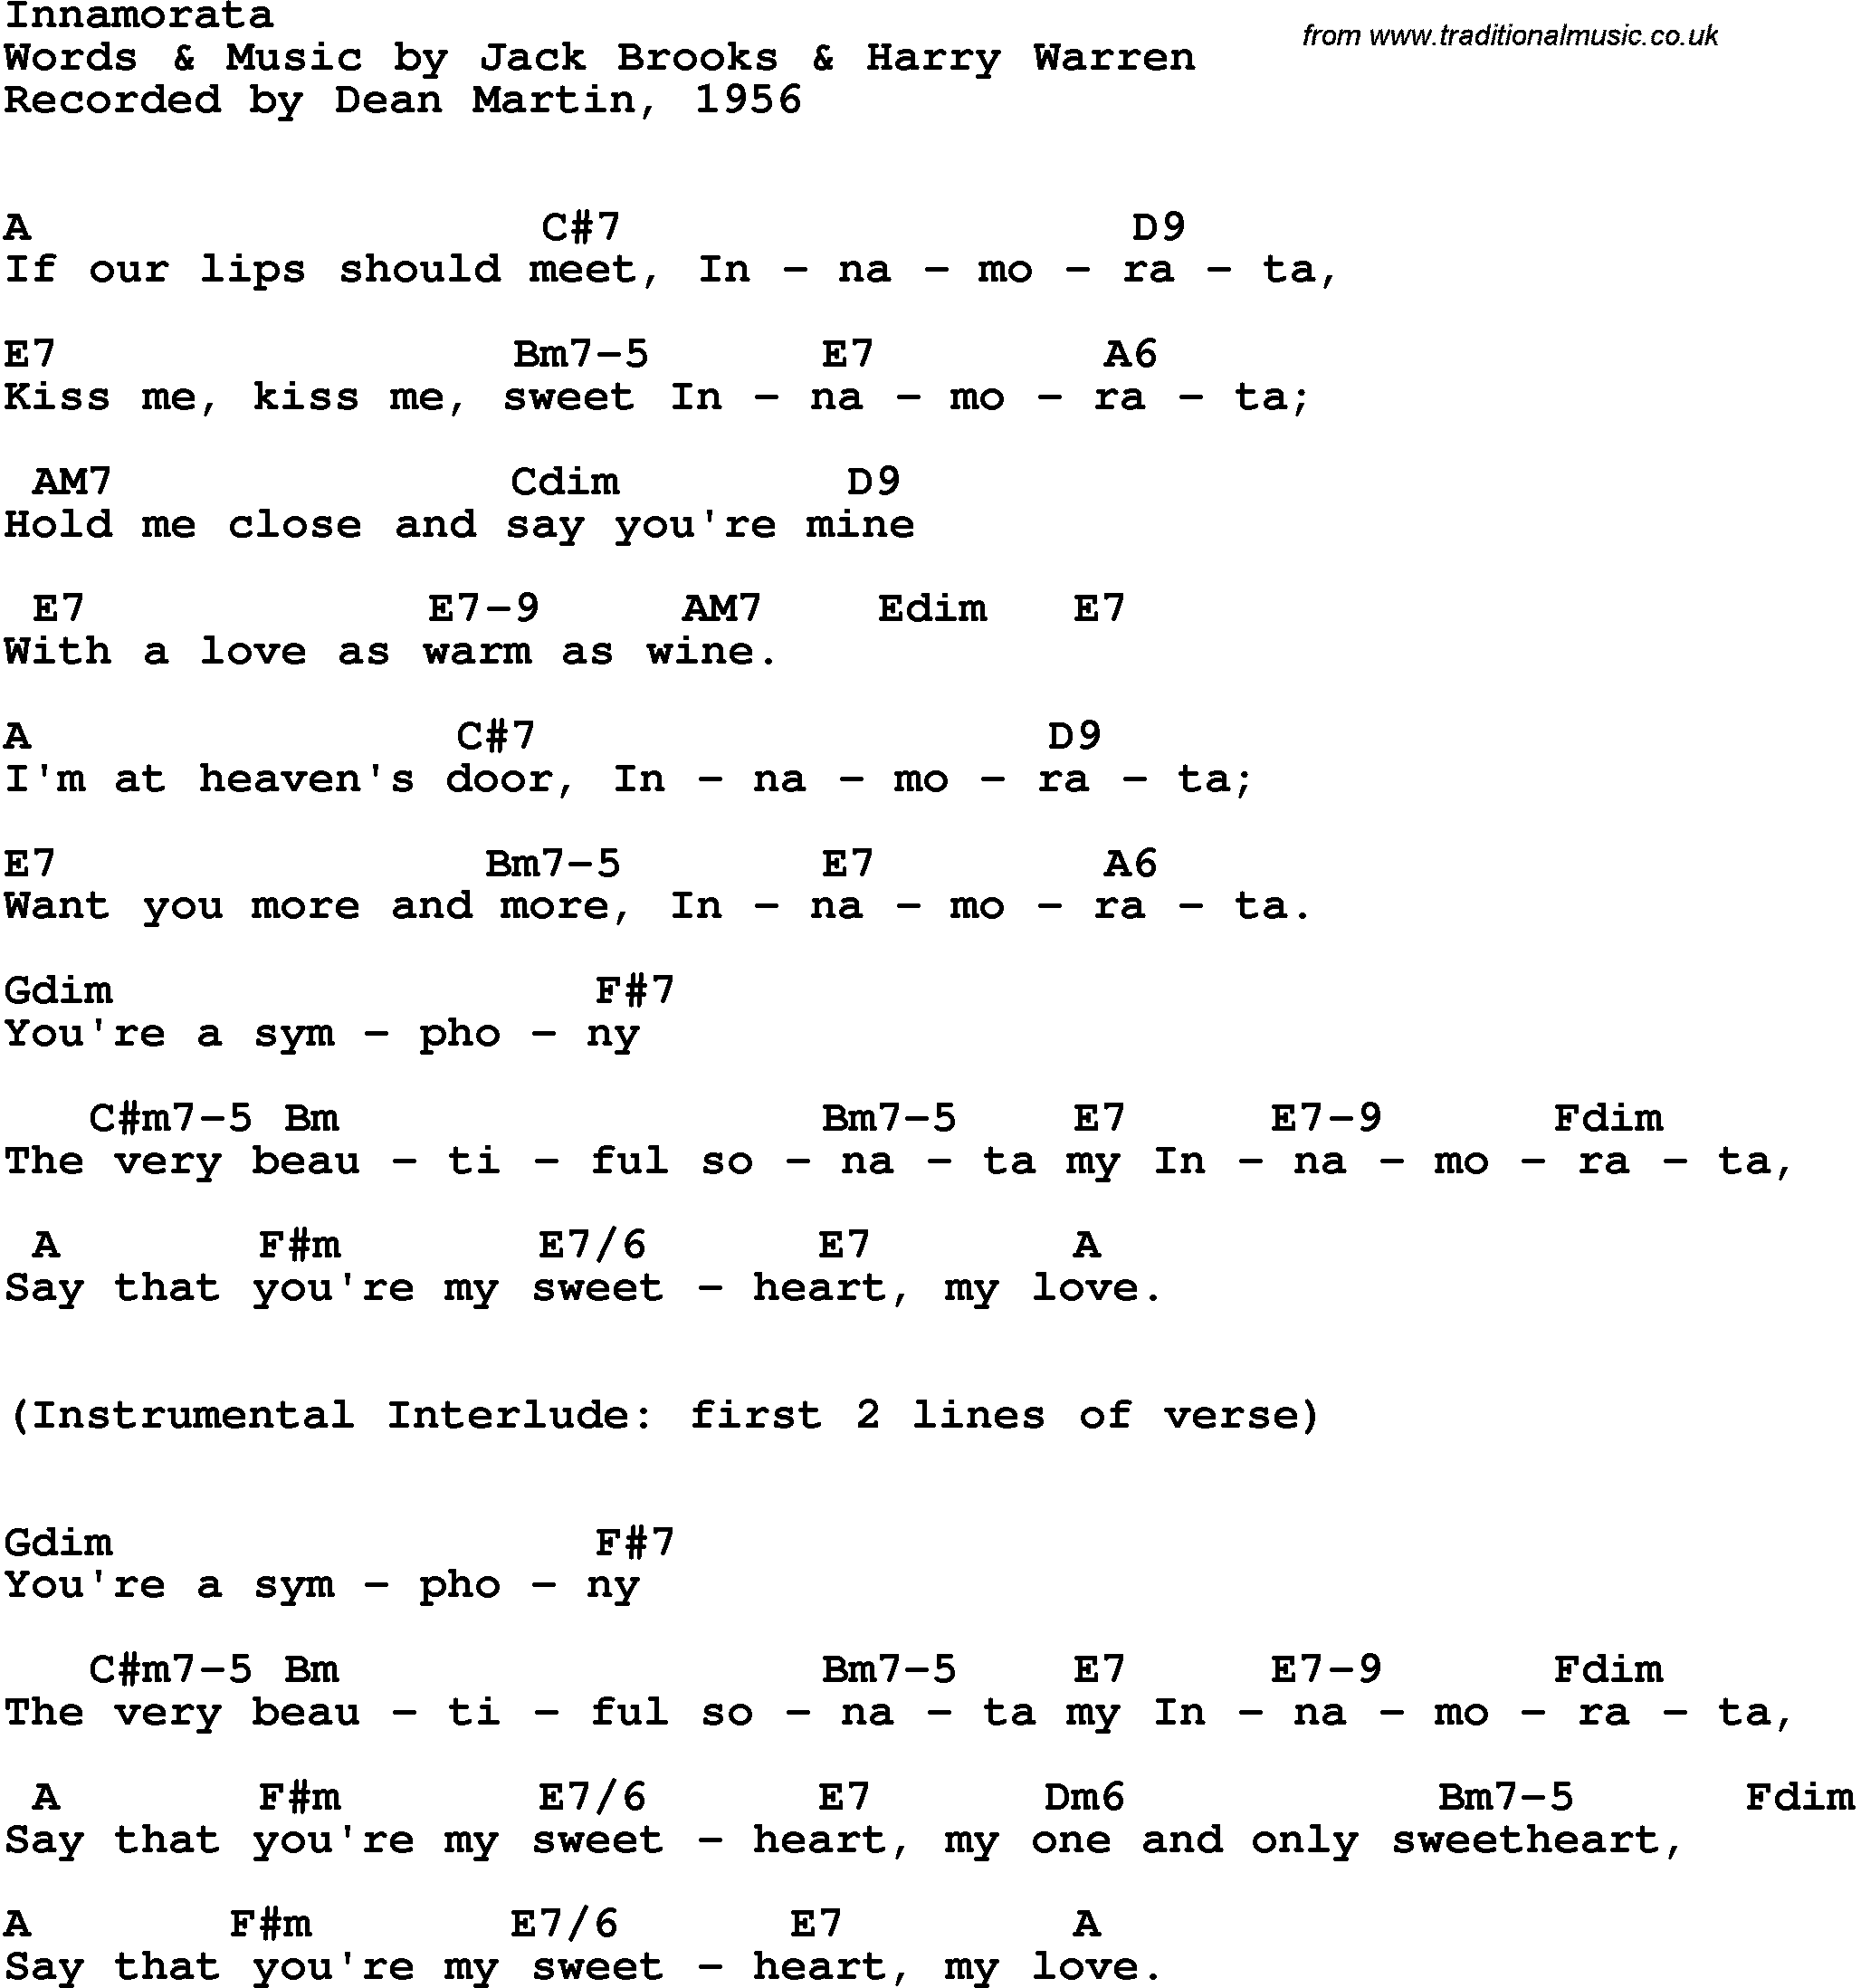 Song Lyrics with guitar chords for Innamorata - Dean Martiv, 1956